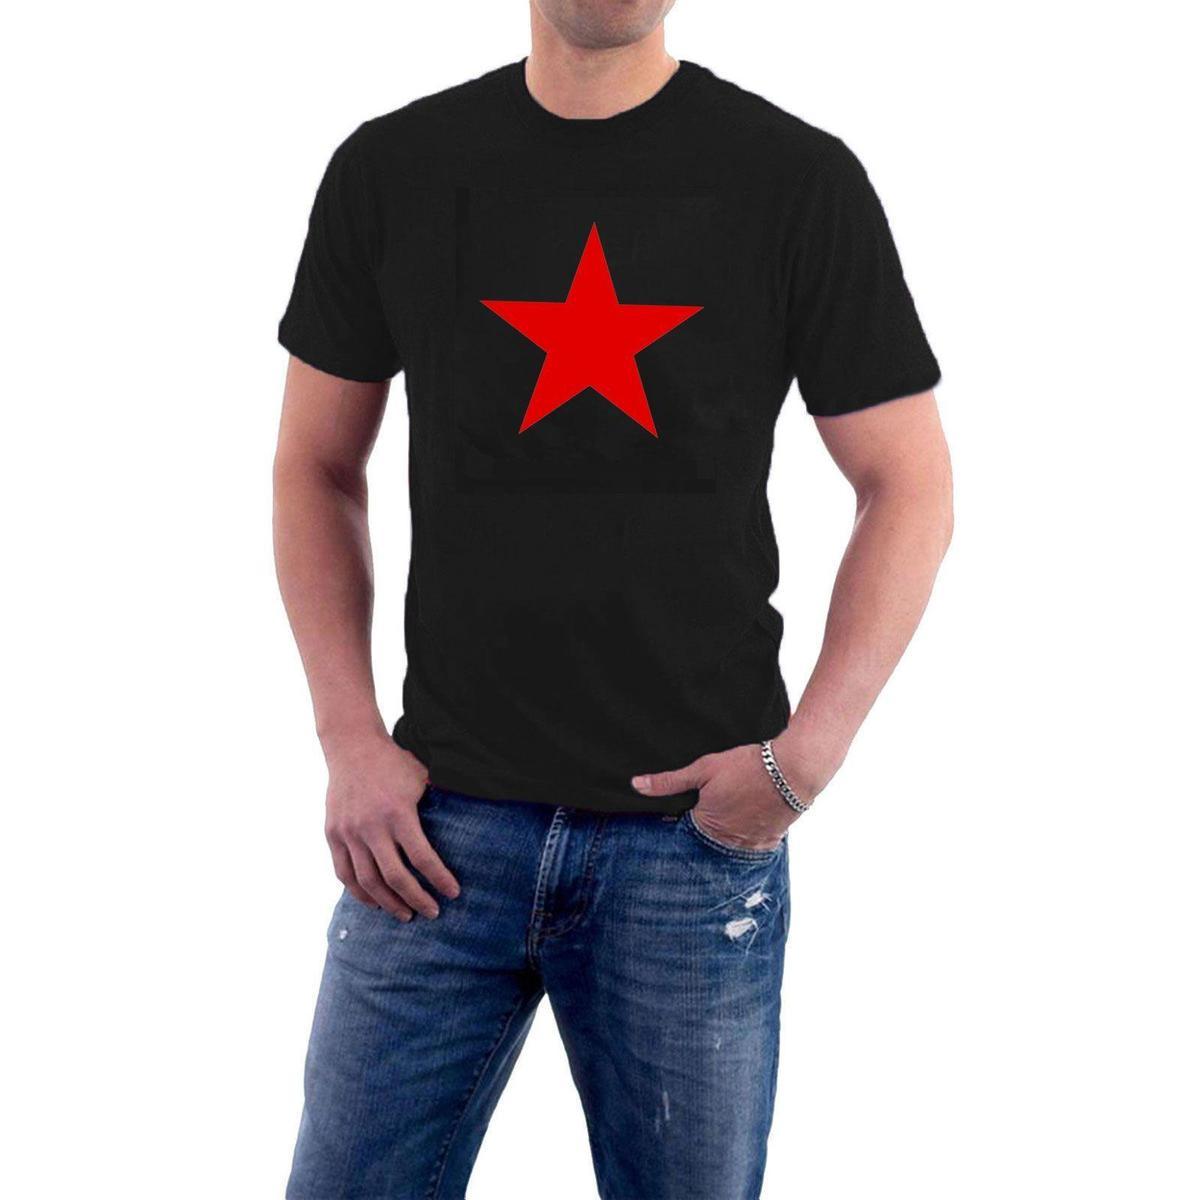 Star Shirt Company Logo - Red Star T Shirt Politics Protest Manics Rage Tee Generic Logo